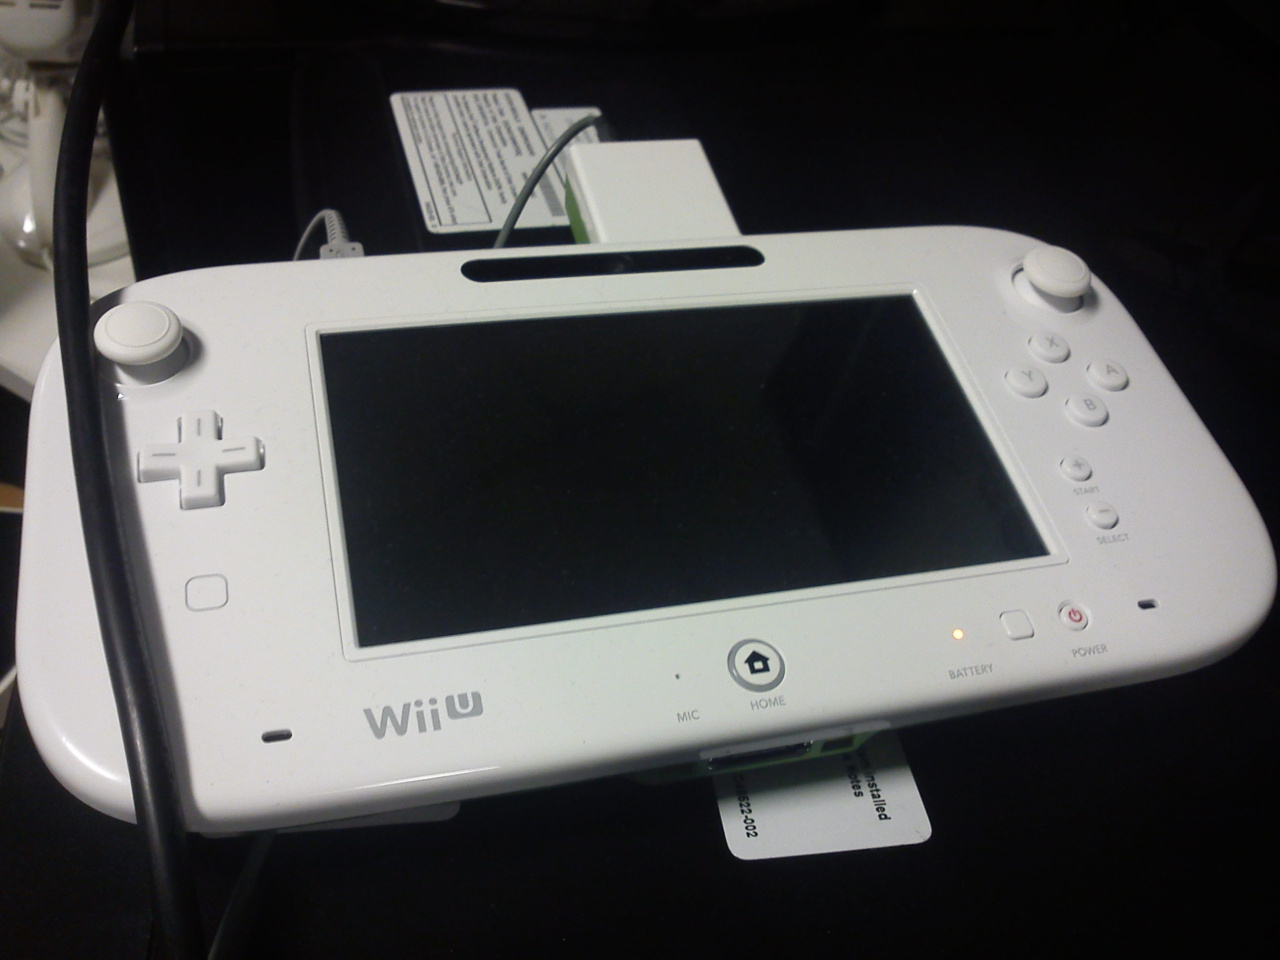 Reggie Explains Why The Nintendo Wii U Didn't Utilise Dual GamePad Support